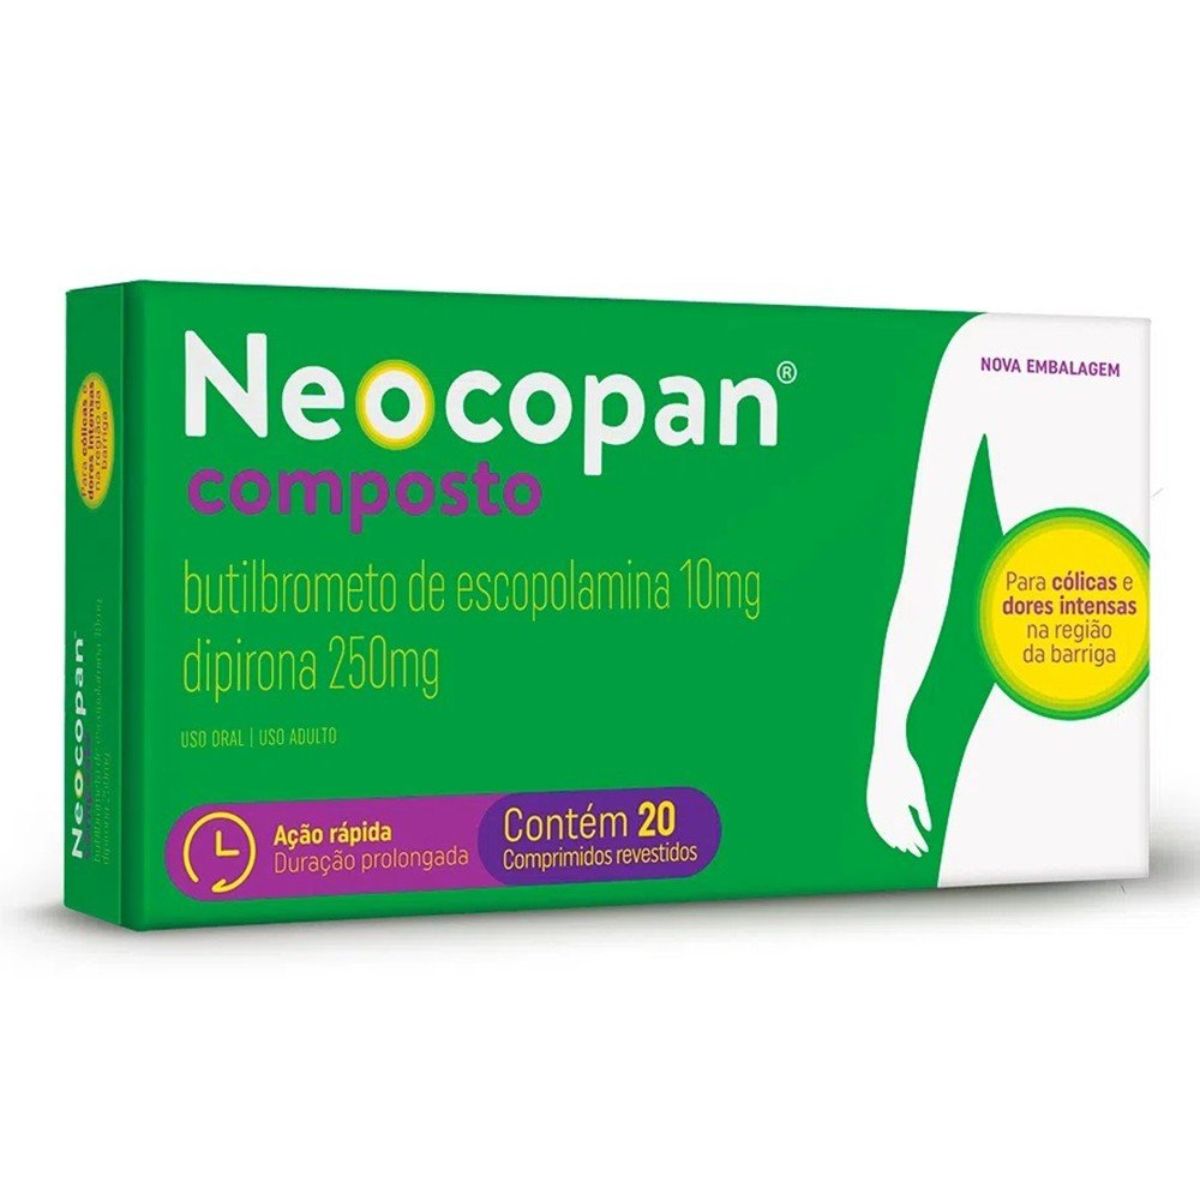 neocopan-10-mg-com-20-comprimidos-revestidos-1.jpg